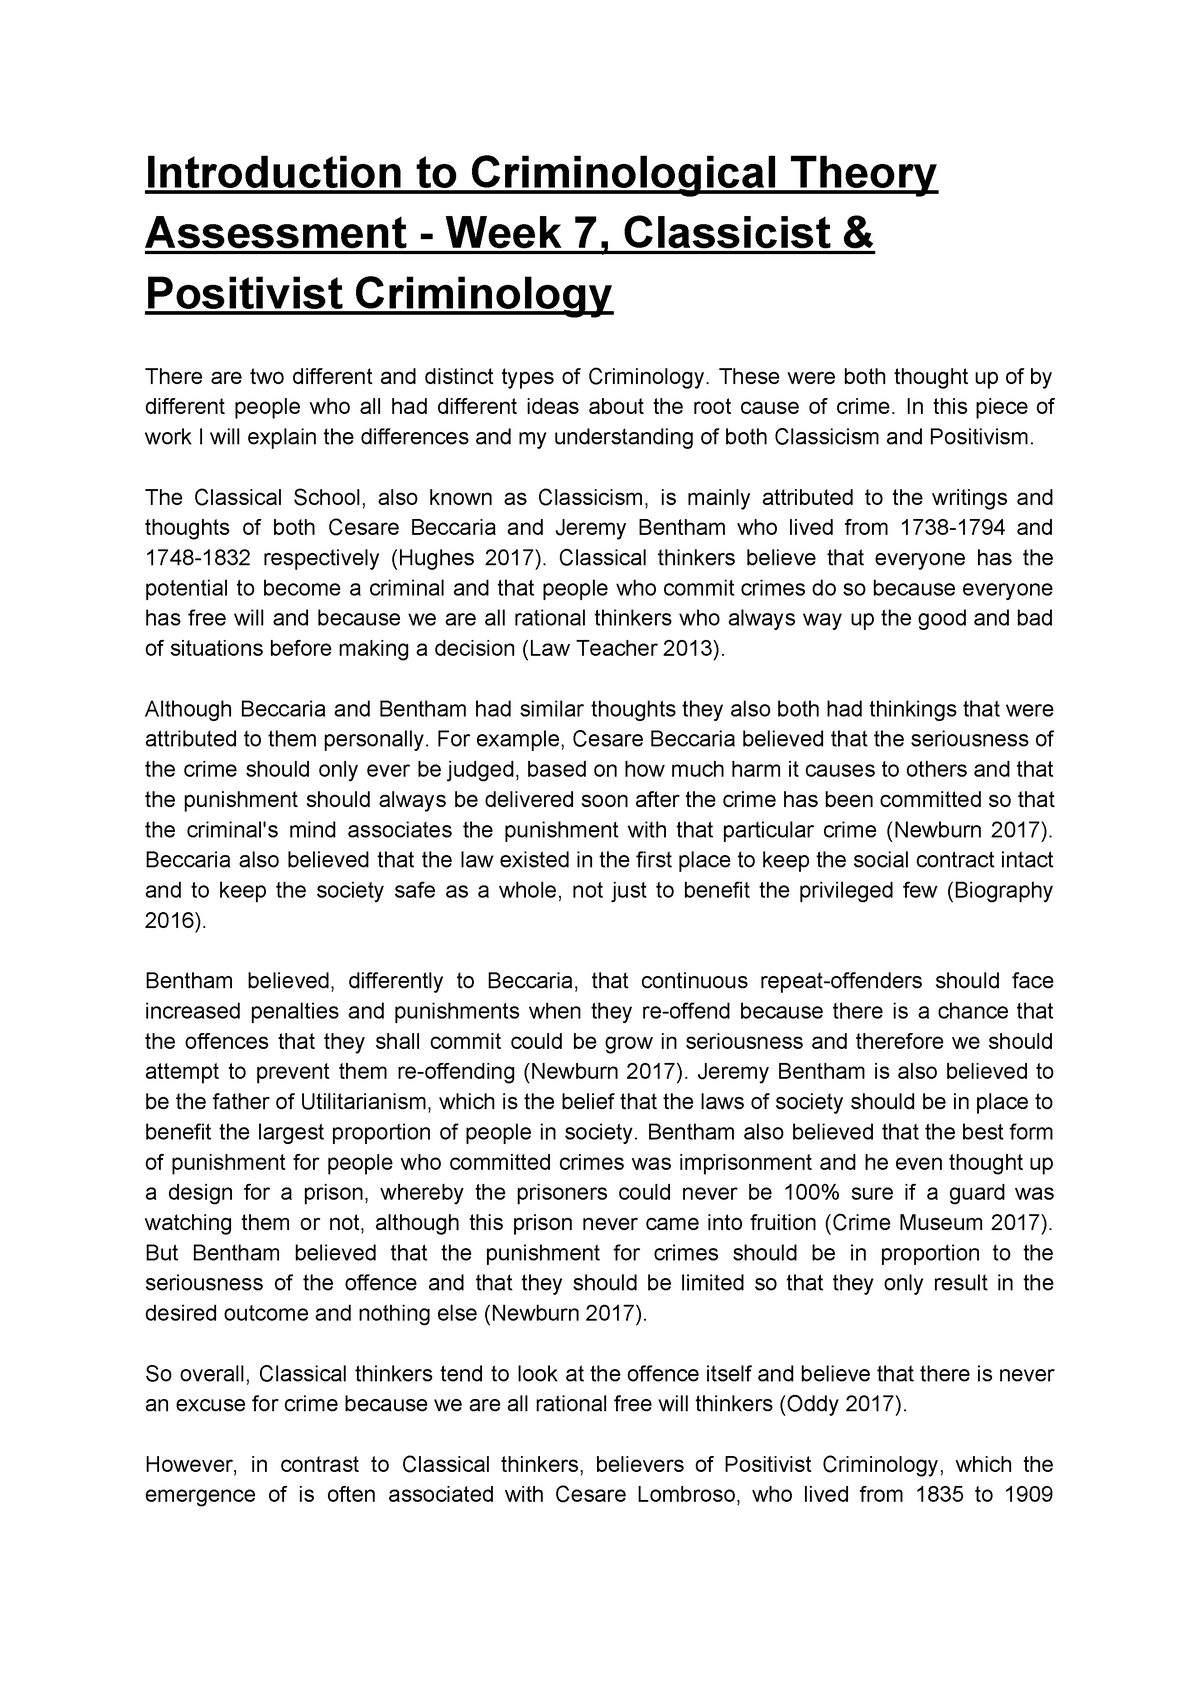 model criminology essay